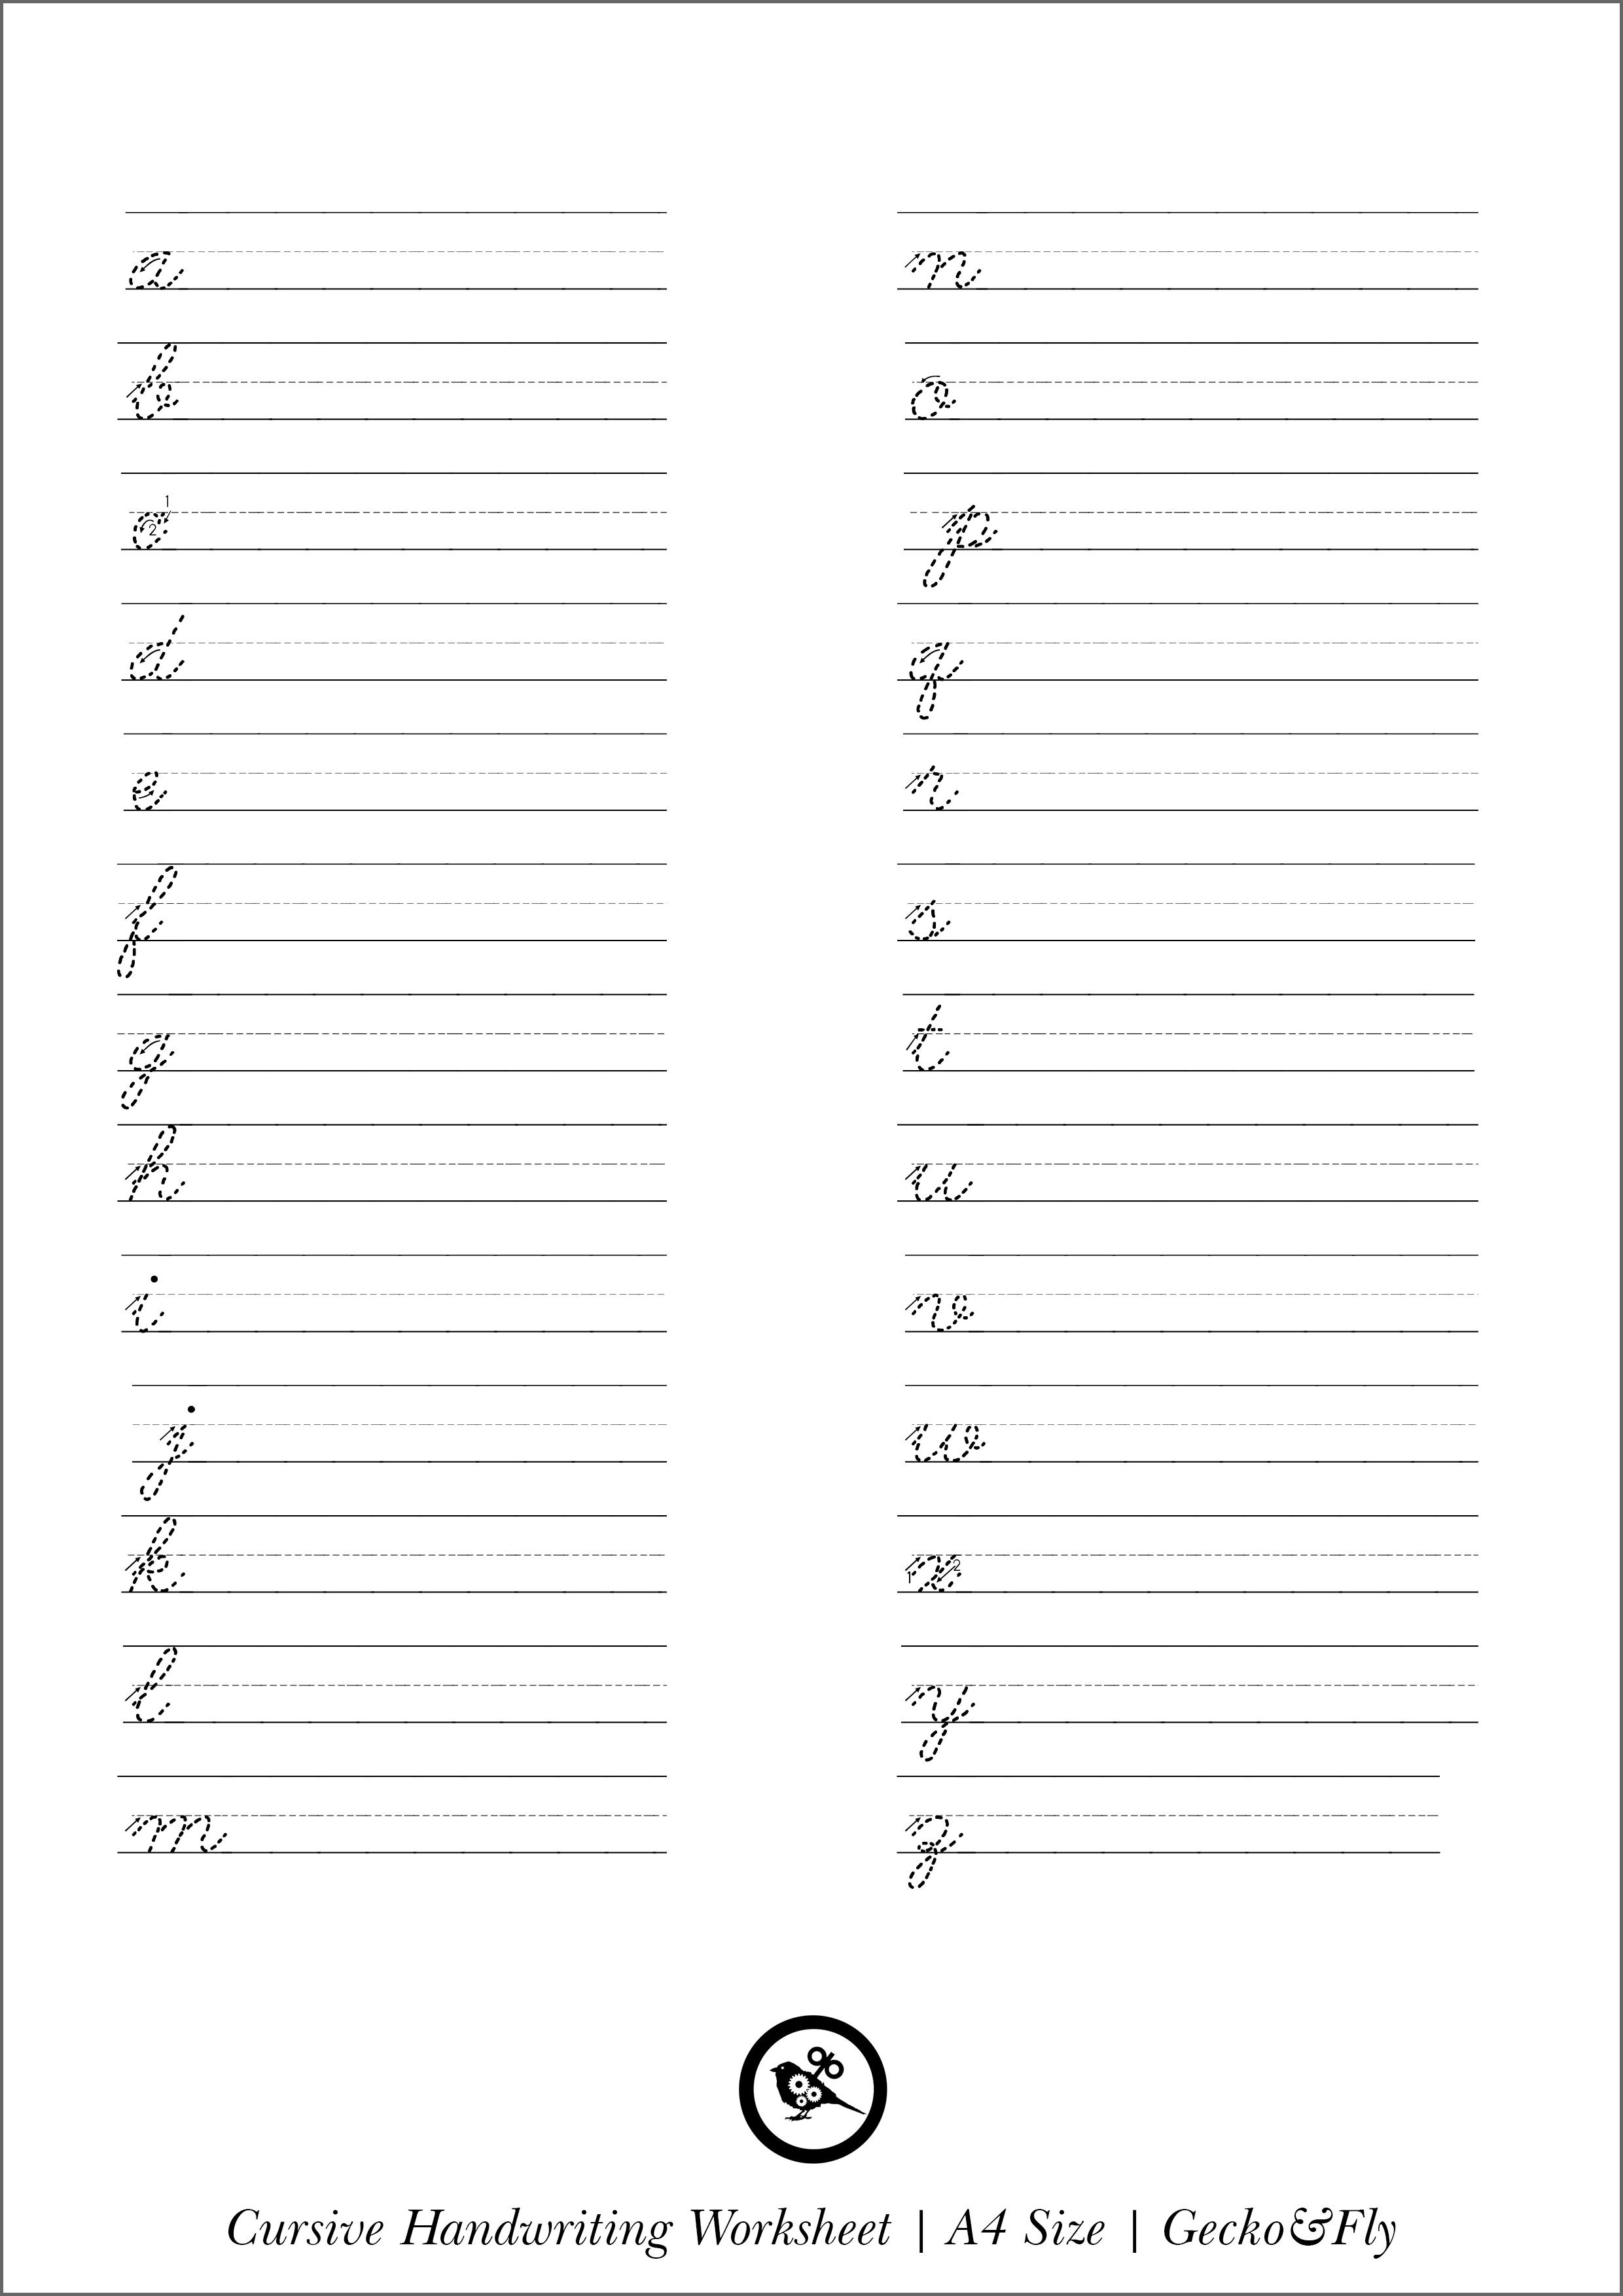 printable-cursive-handwriting-worksheets